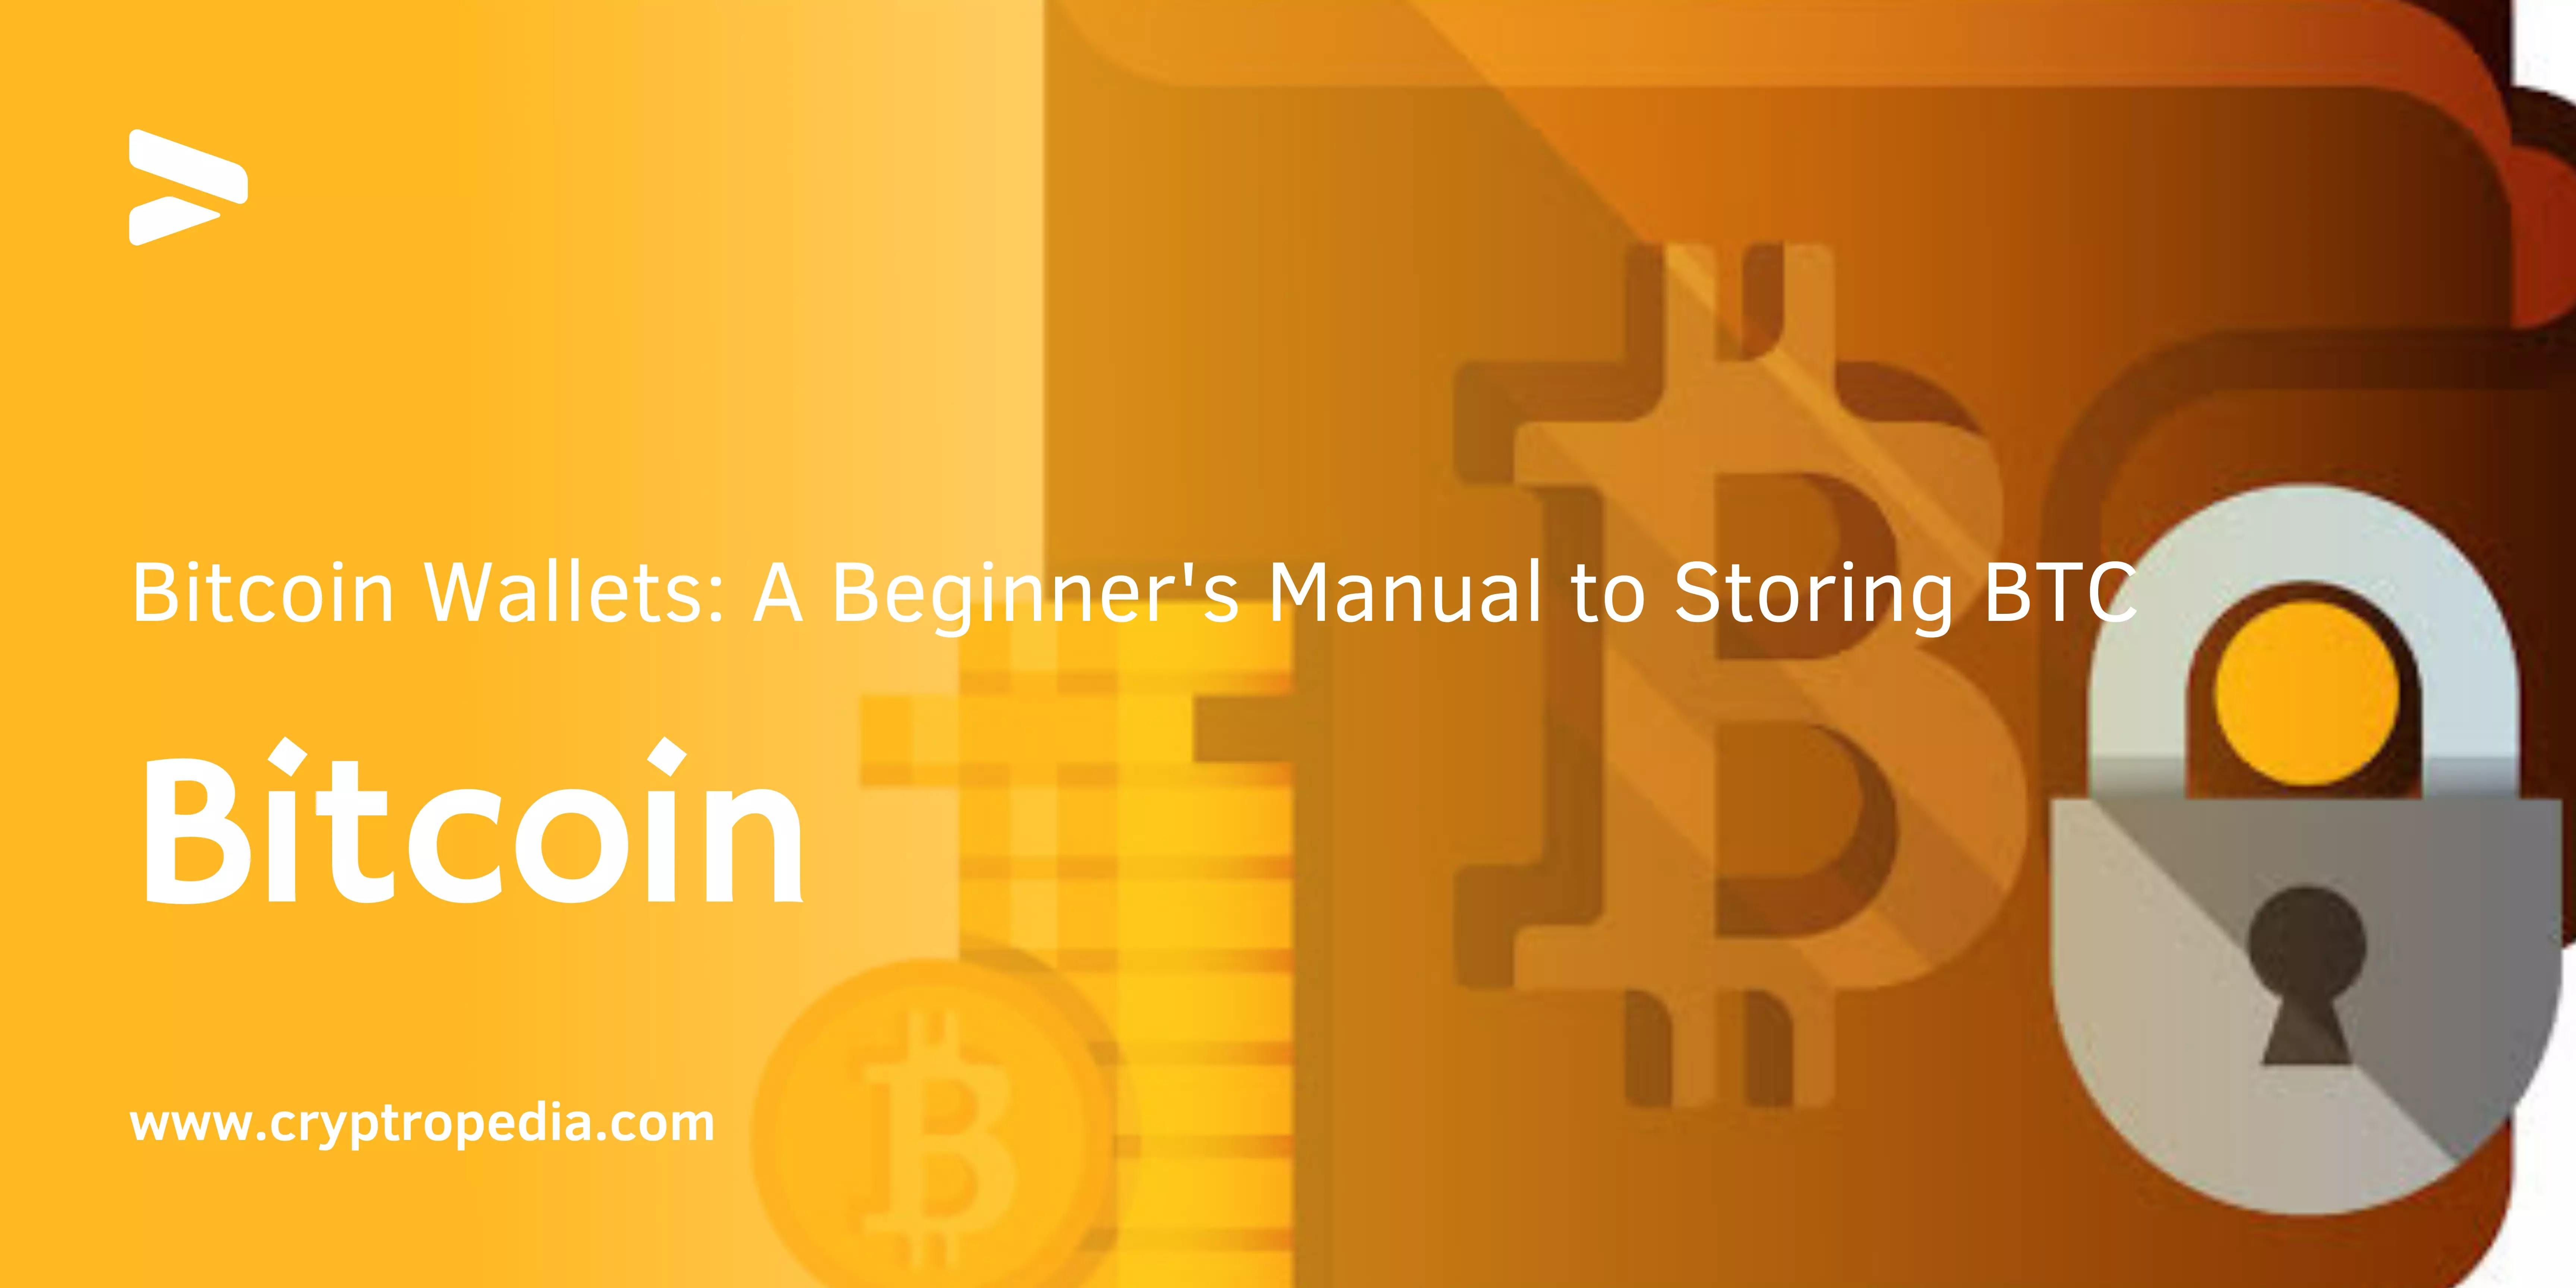 Bitcoin Wallets: A Beginner's Manual to Storing BTC